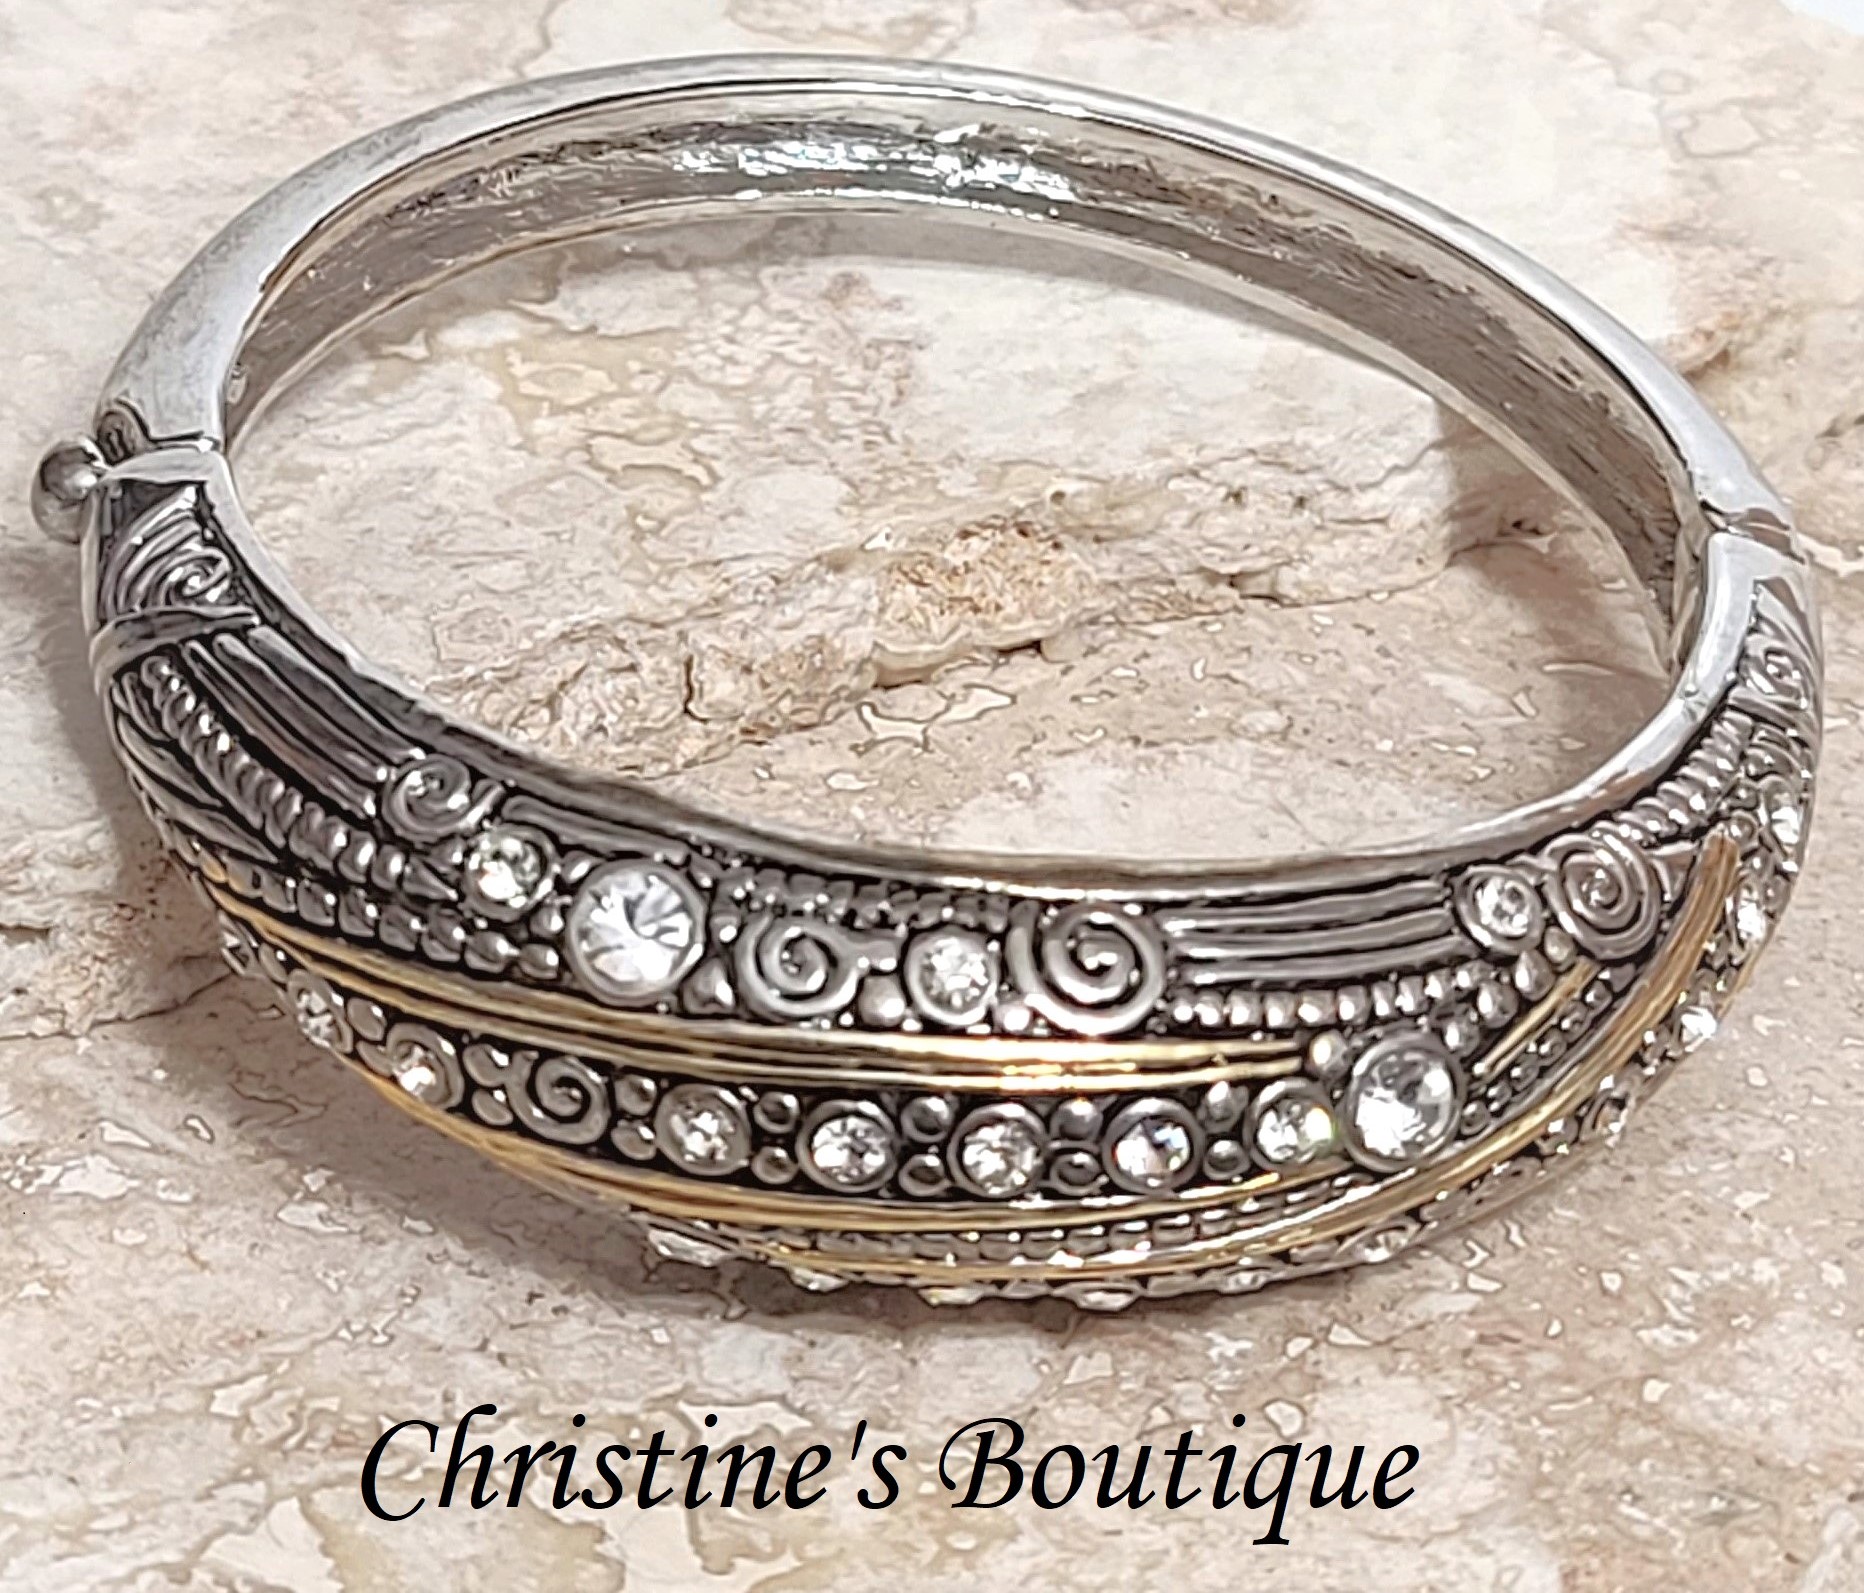 Rhinestone bangle bracelet, two tone gold and silver fashion bracelet - Click Image to Close